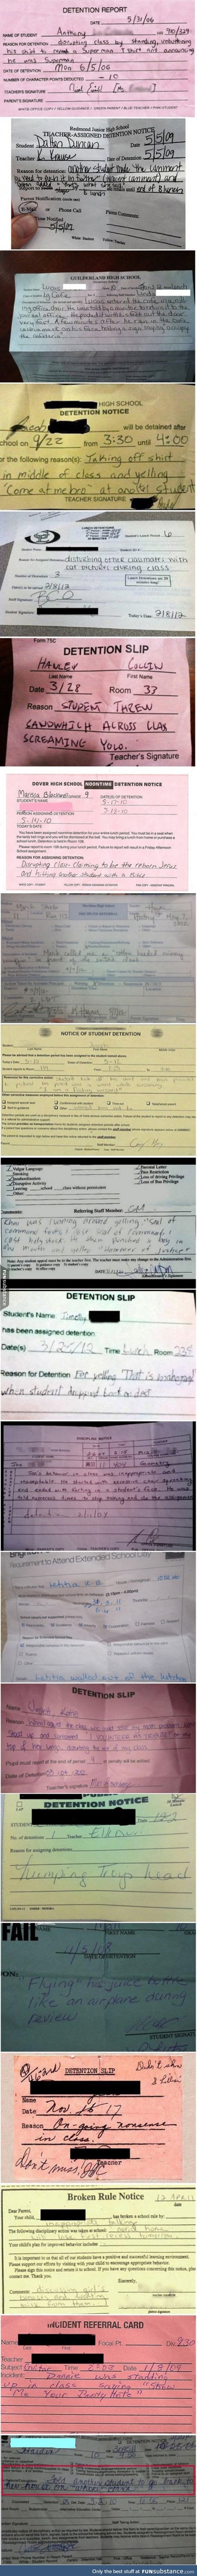 Detention slips nowadays